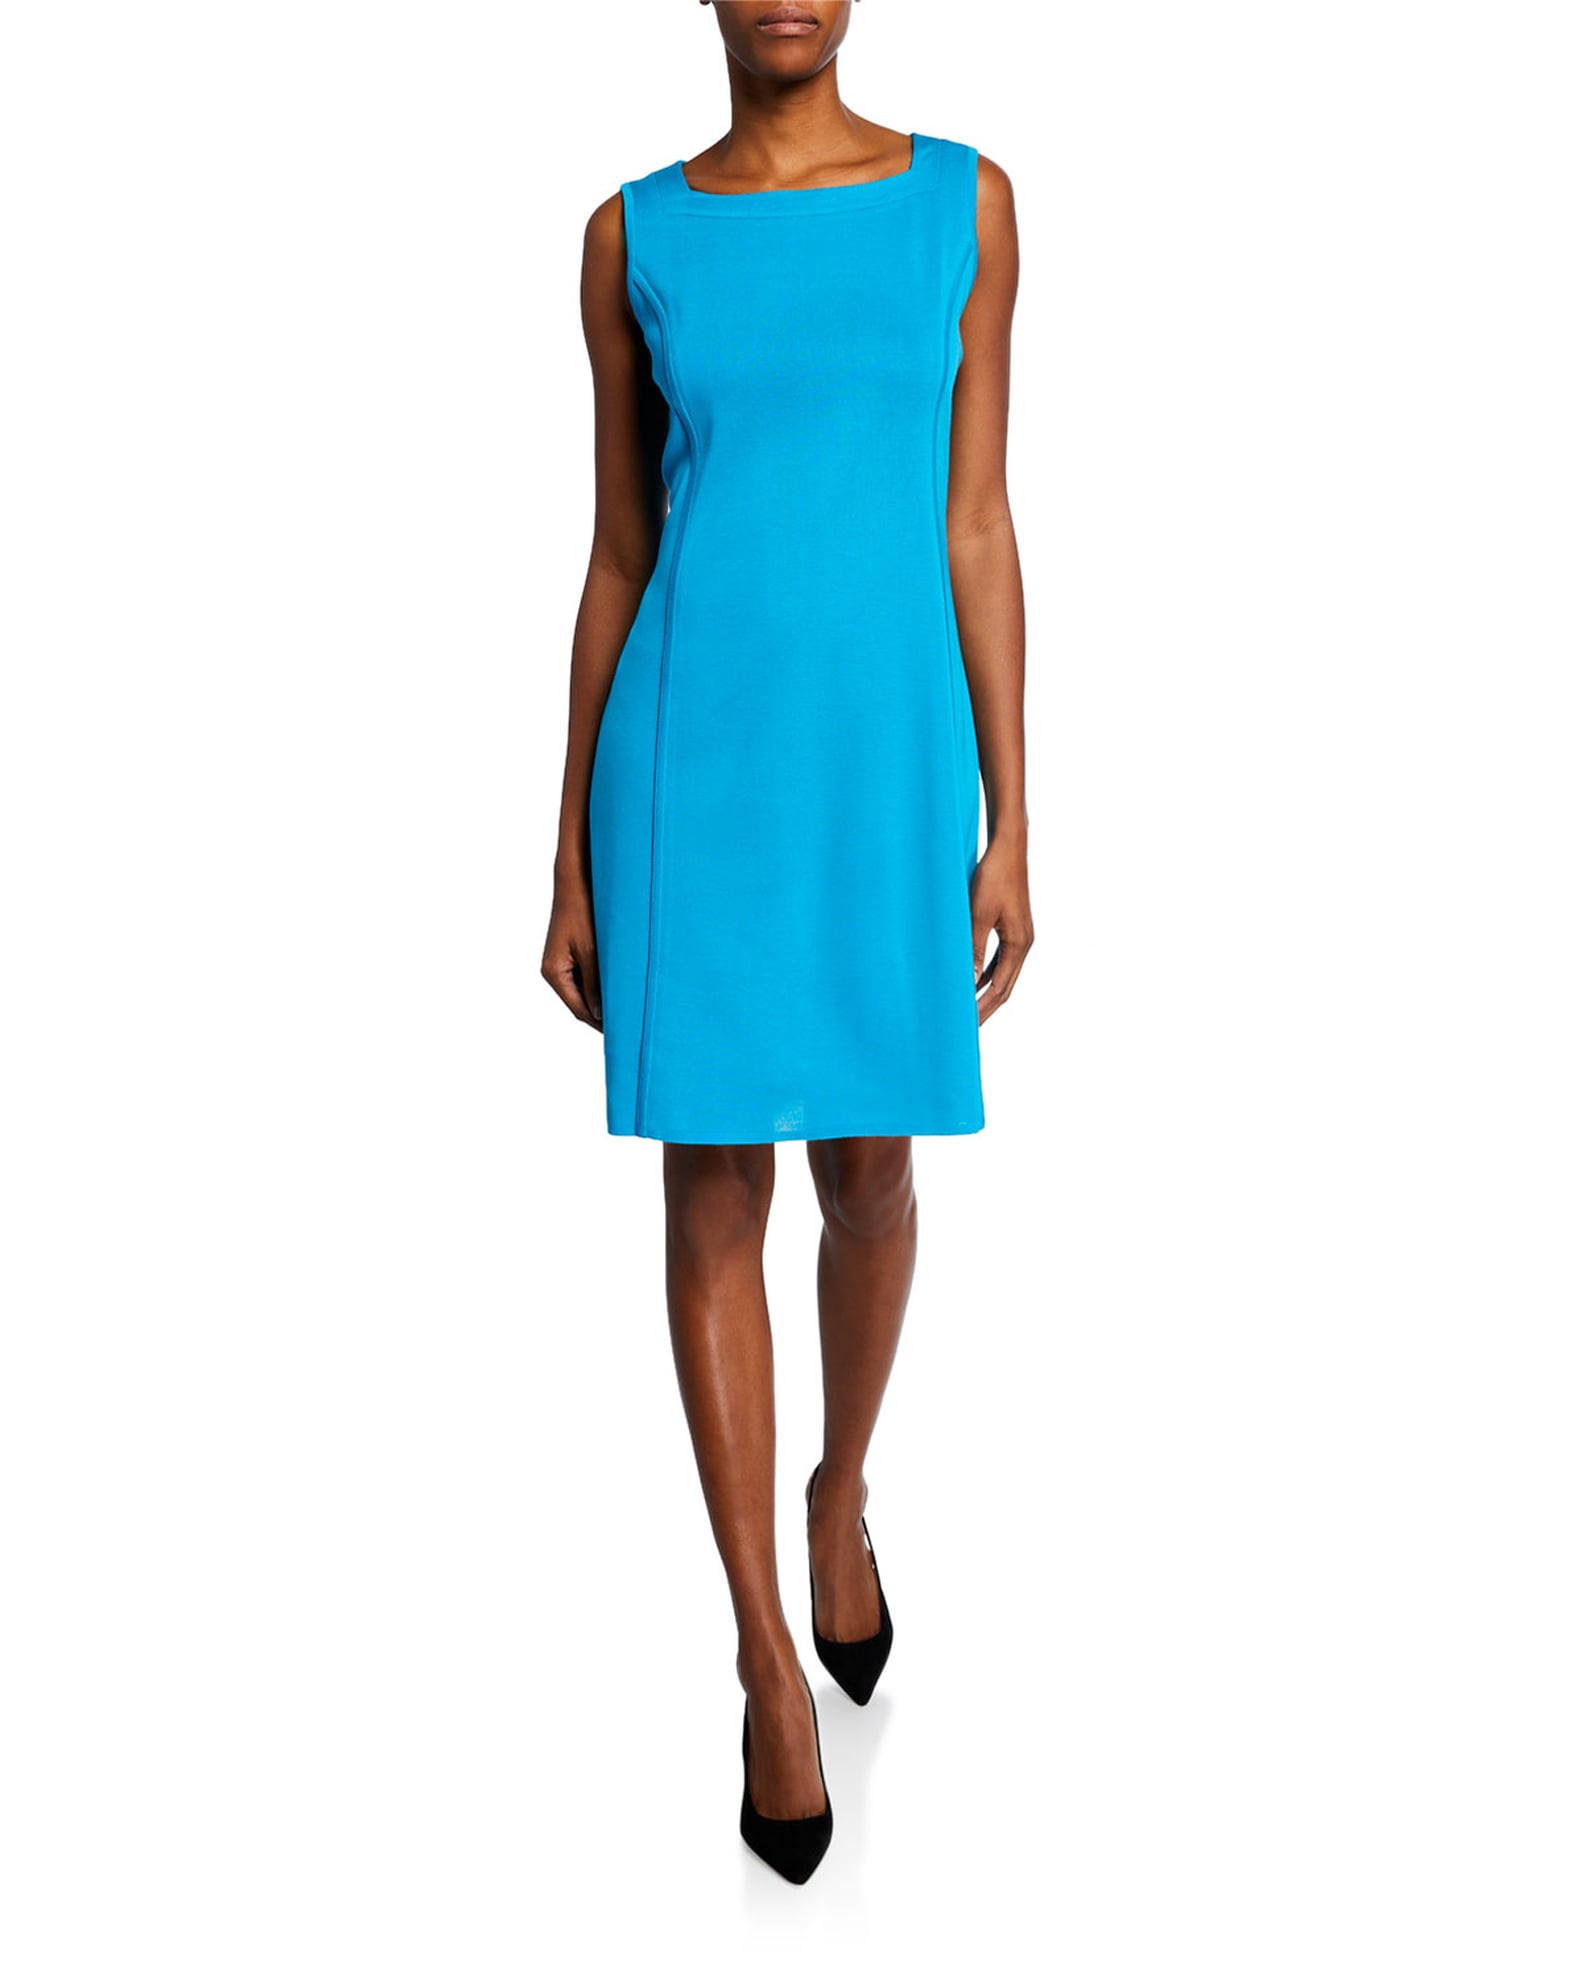 Meghan Markle's Blue Victoria Beckham Dress 2020 | POPSUGAR Fashion